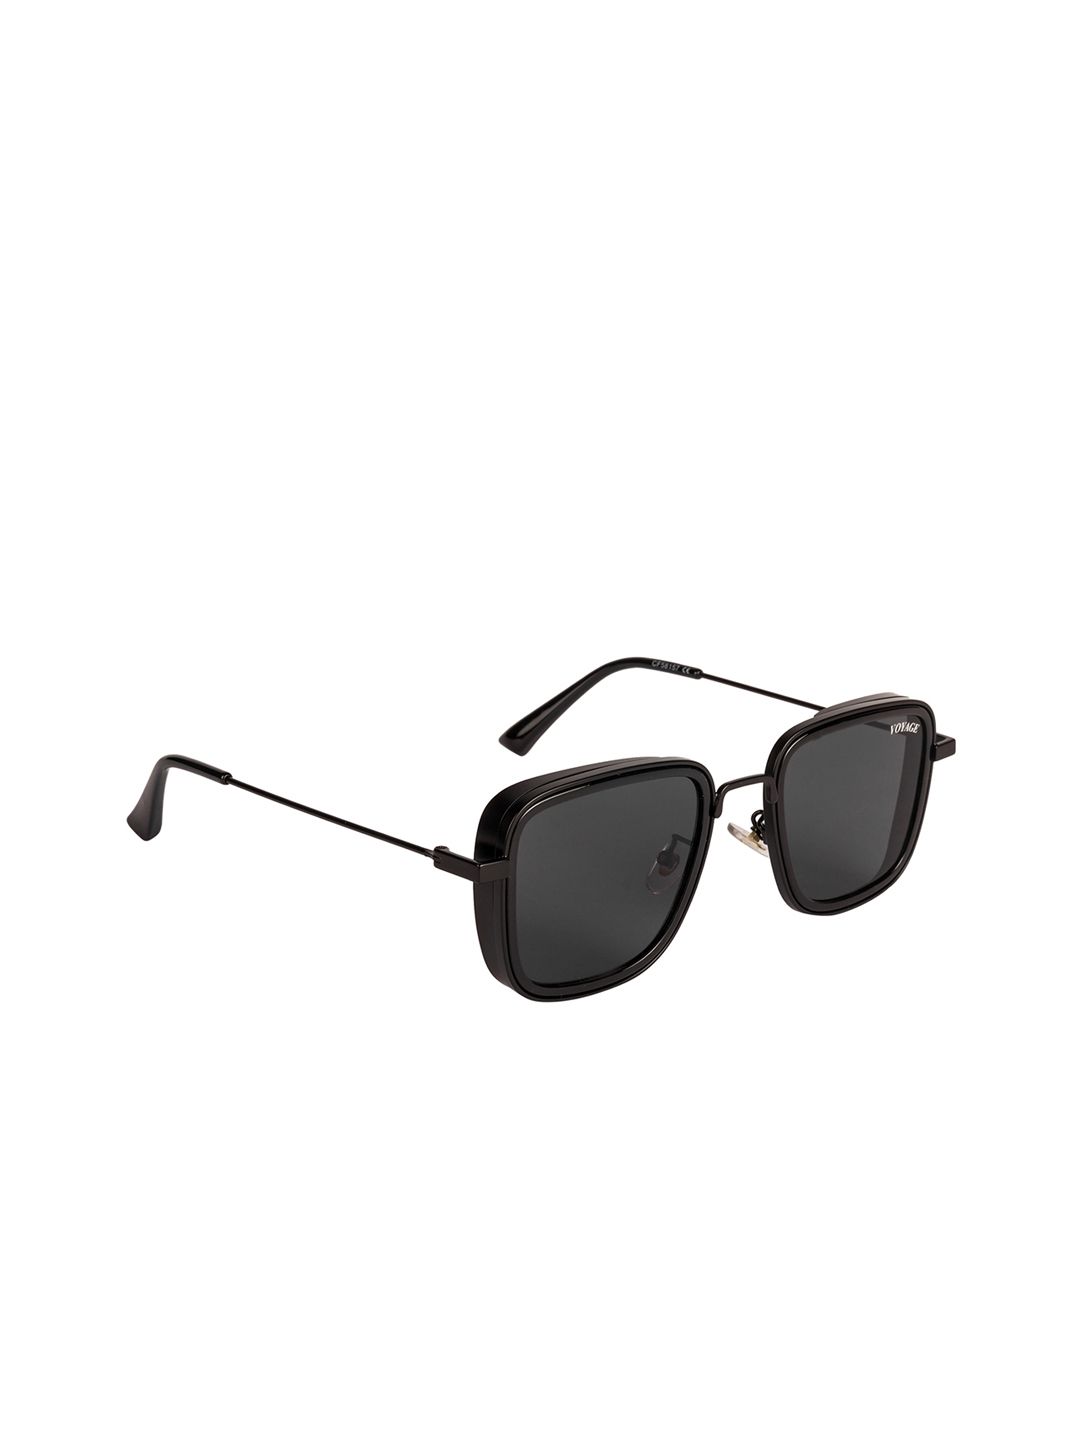 Voyage Unisex Square Sunglasses 58157MG2968 Price in India